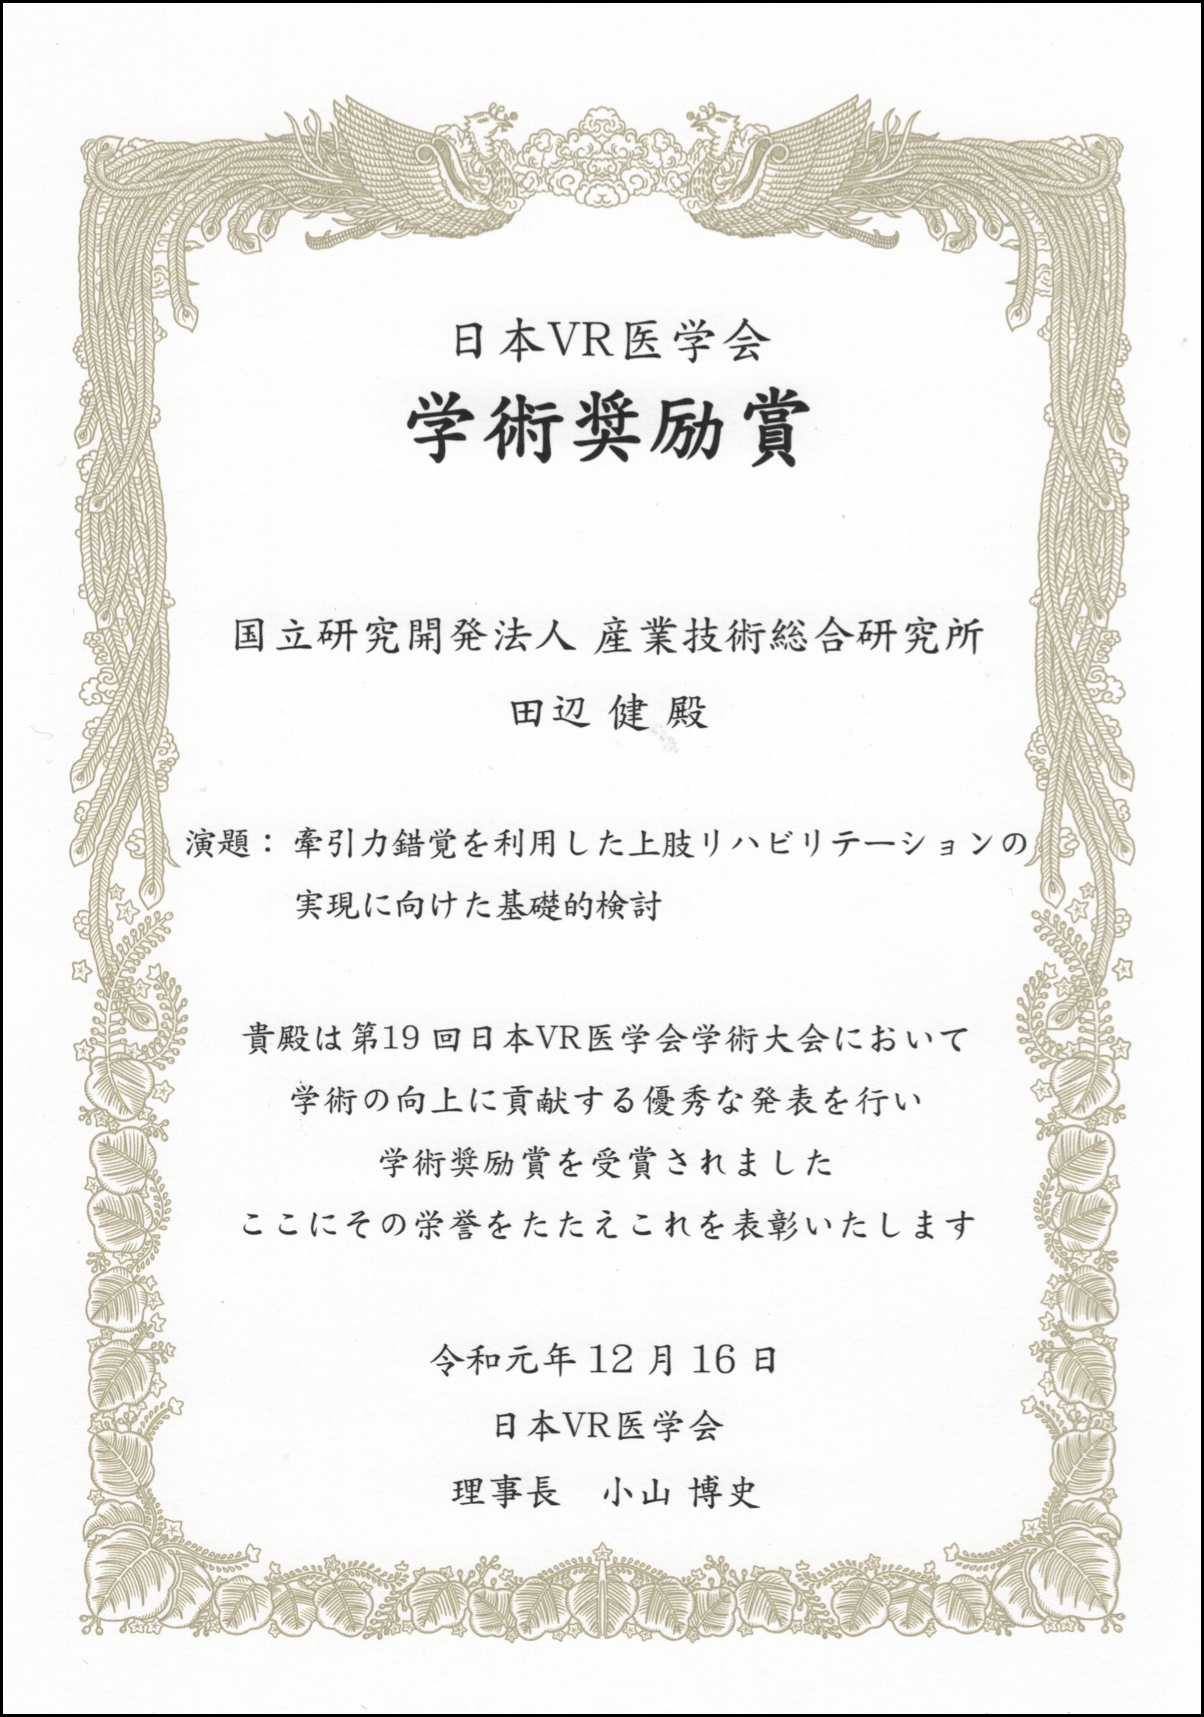 The certificate of merit